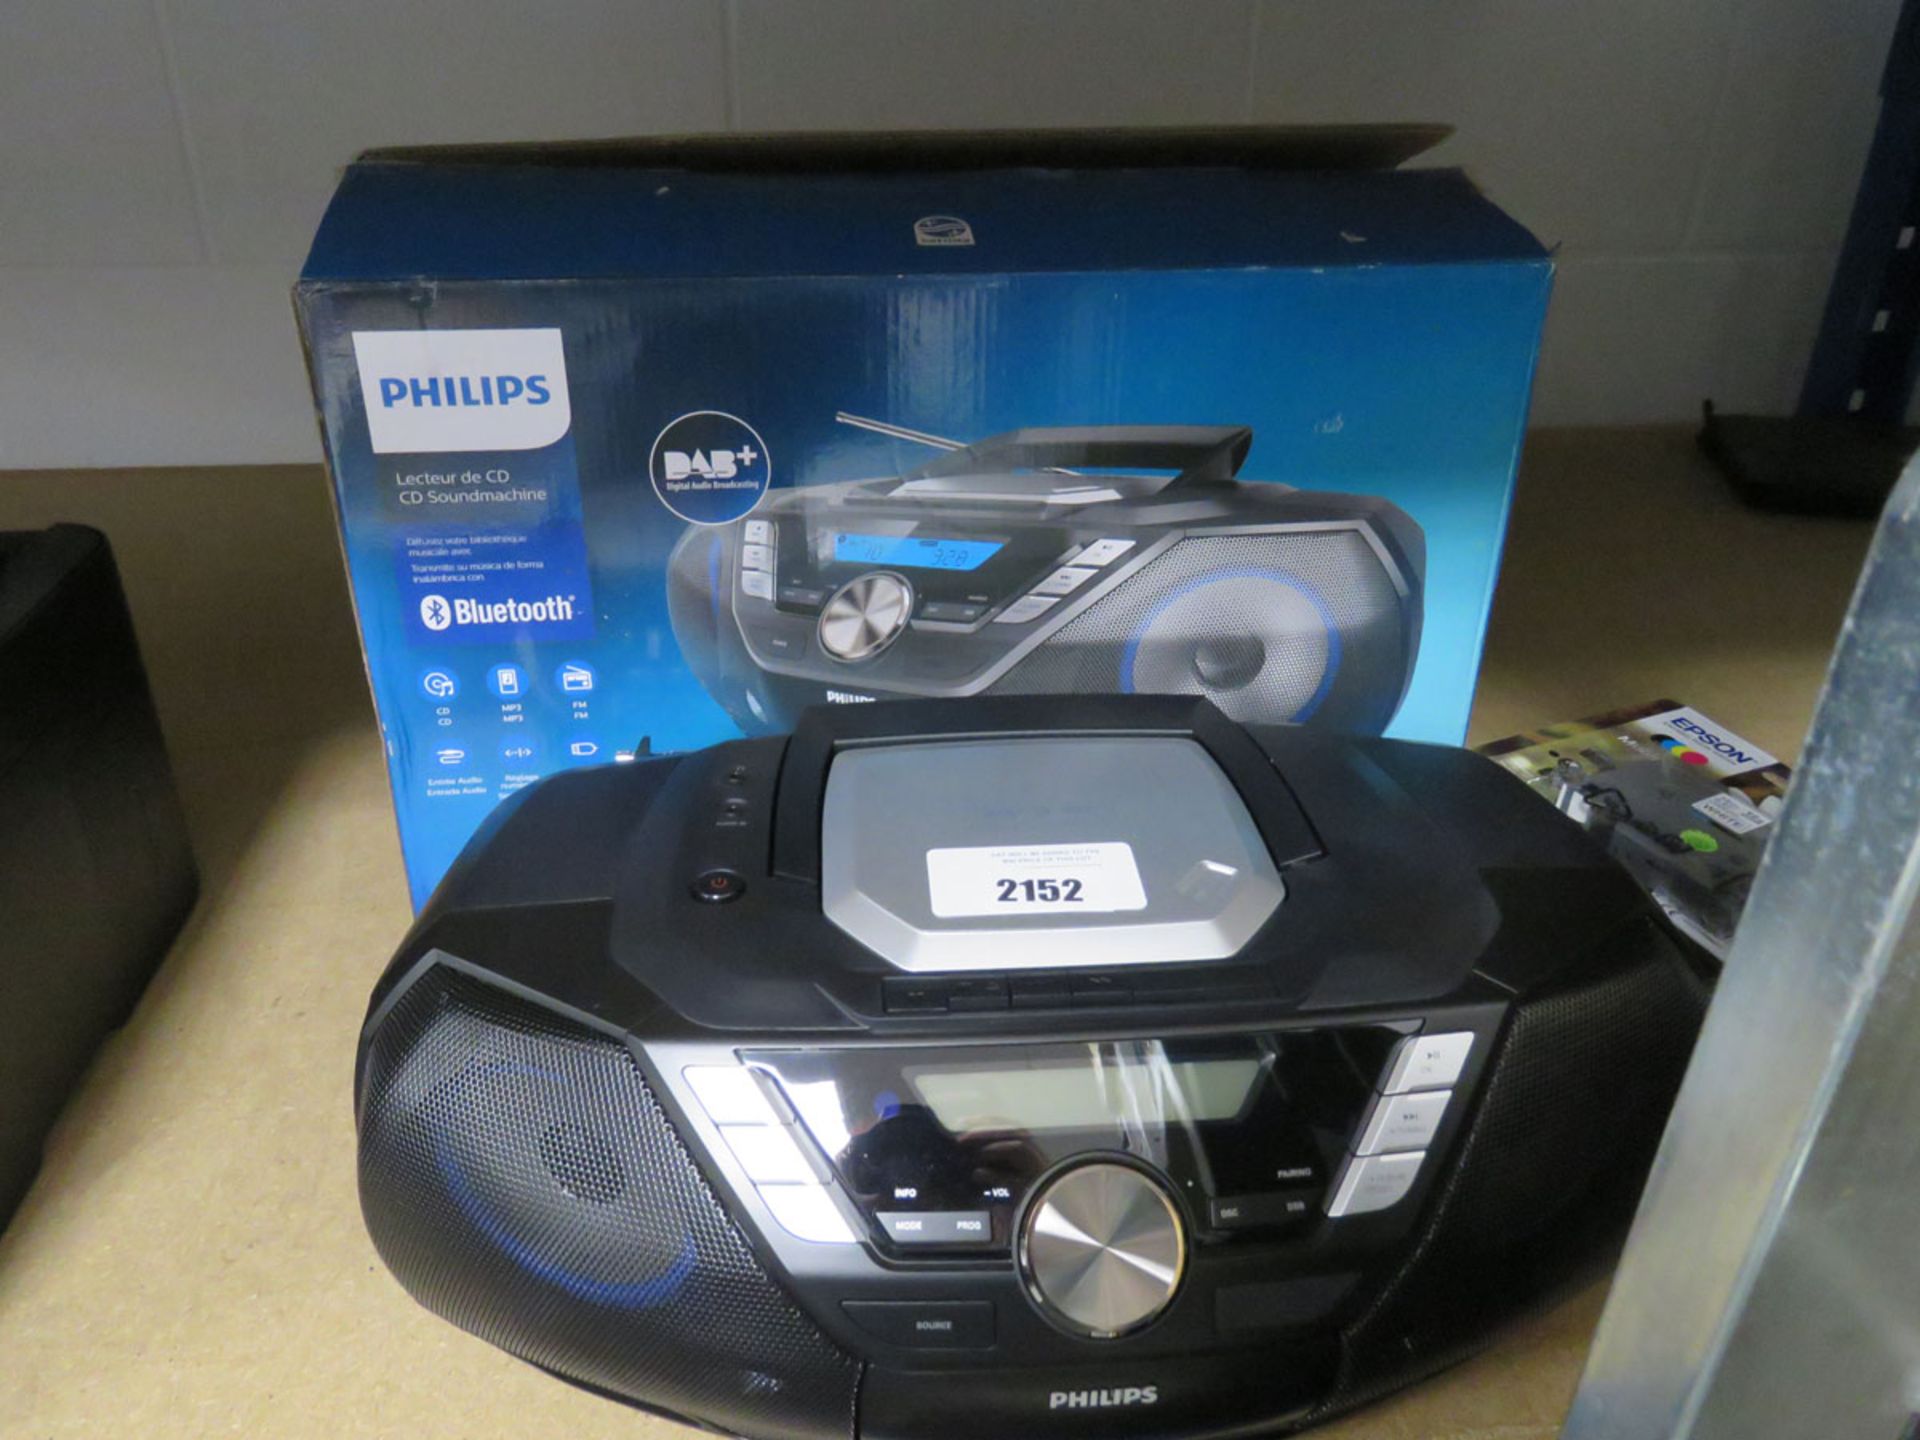 Philips DAB Plus bluetooth CD player/radio system with box